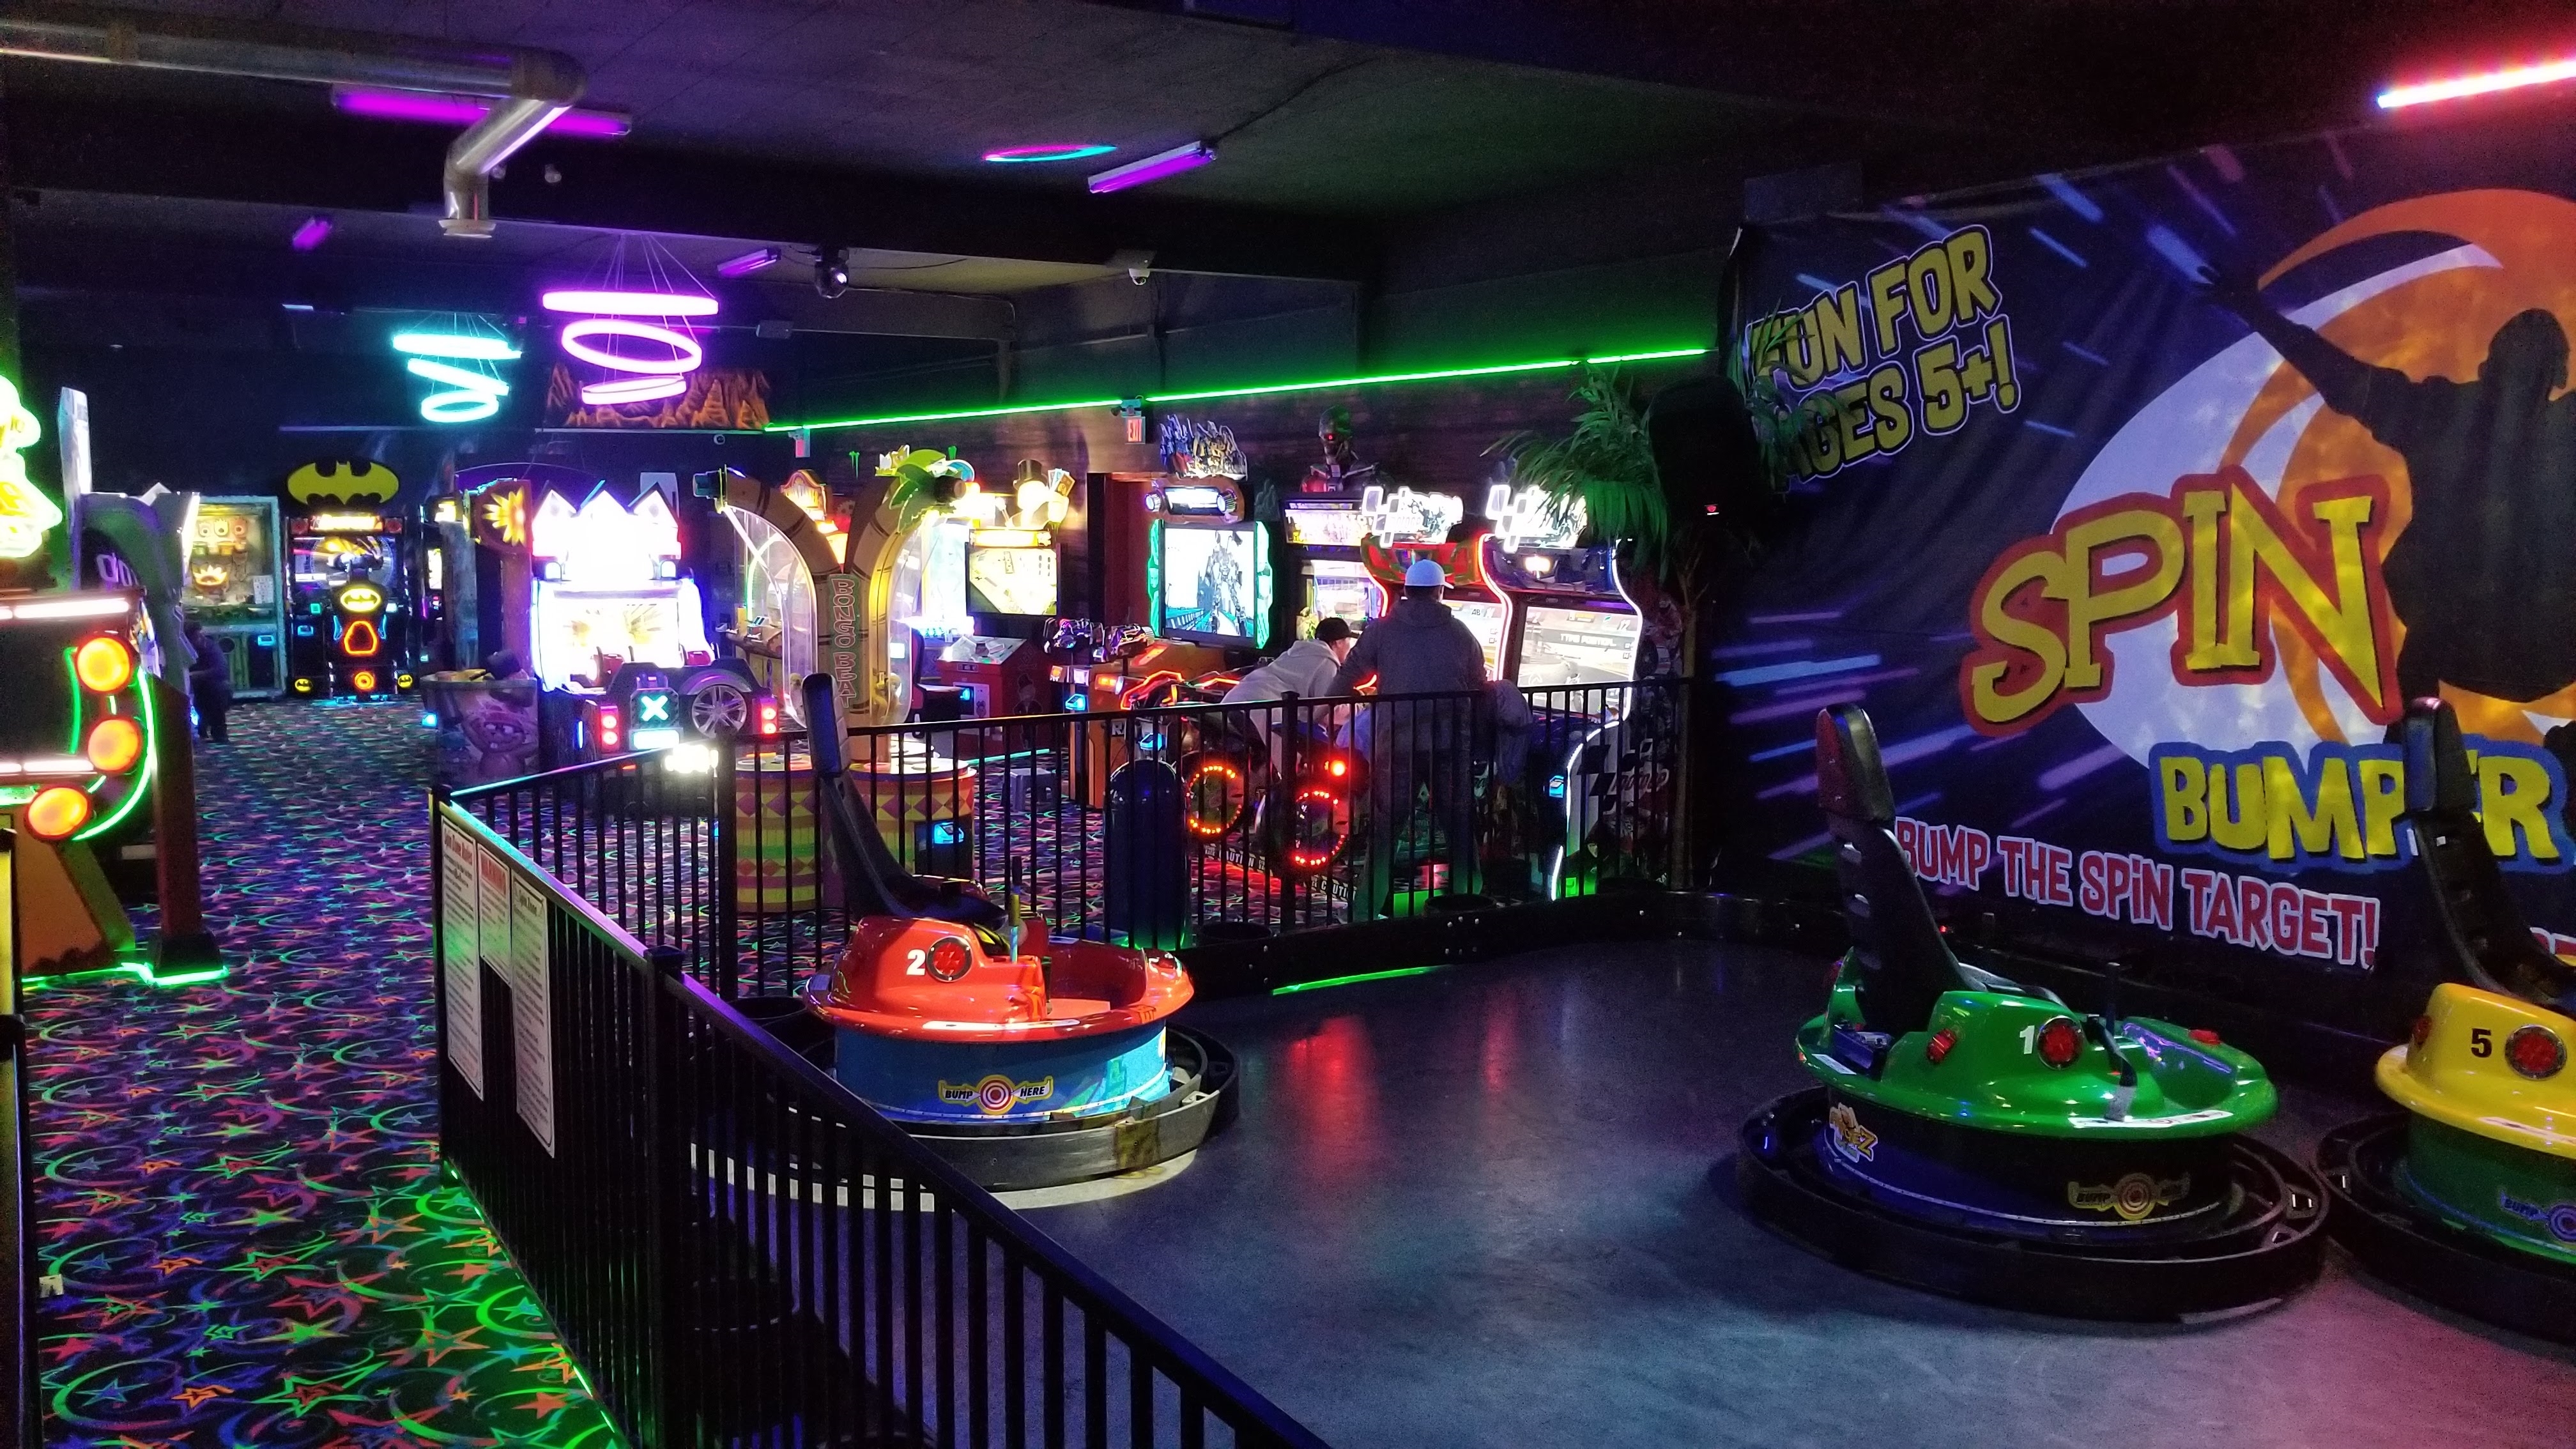 The Fun Factor Fun Centre - Laser Tag  Bowling Bumper Cars - Kamloops